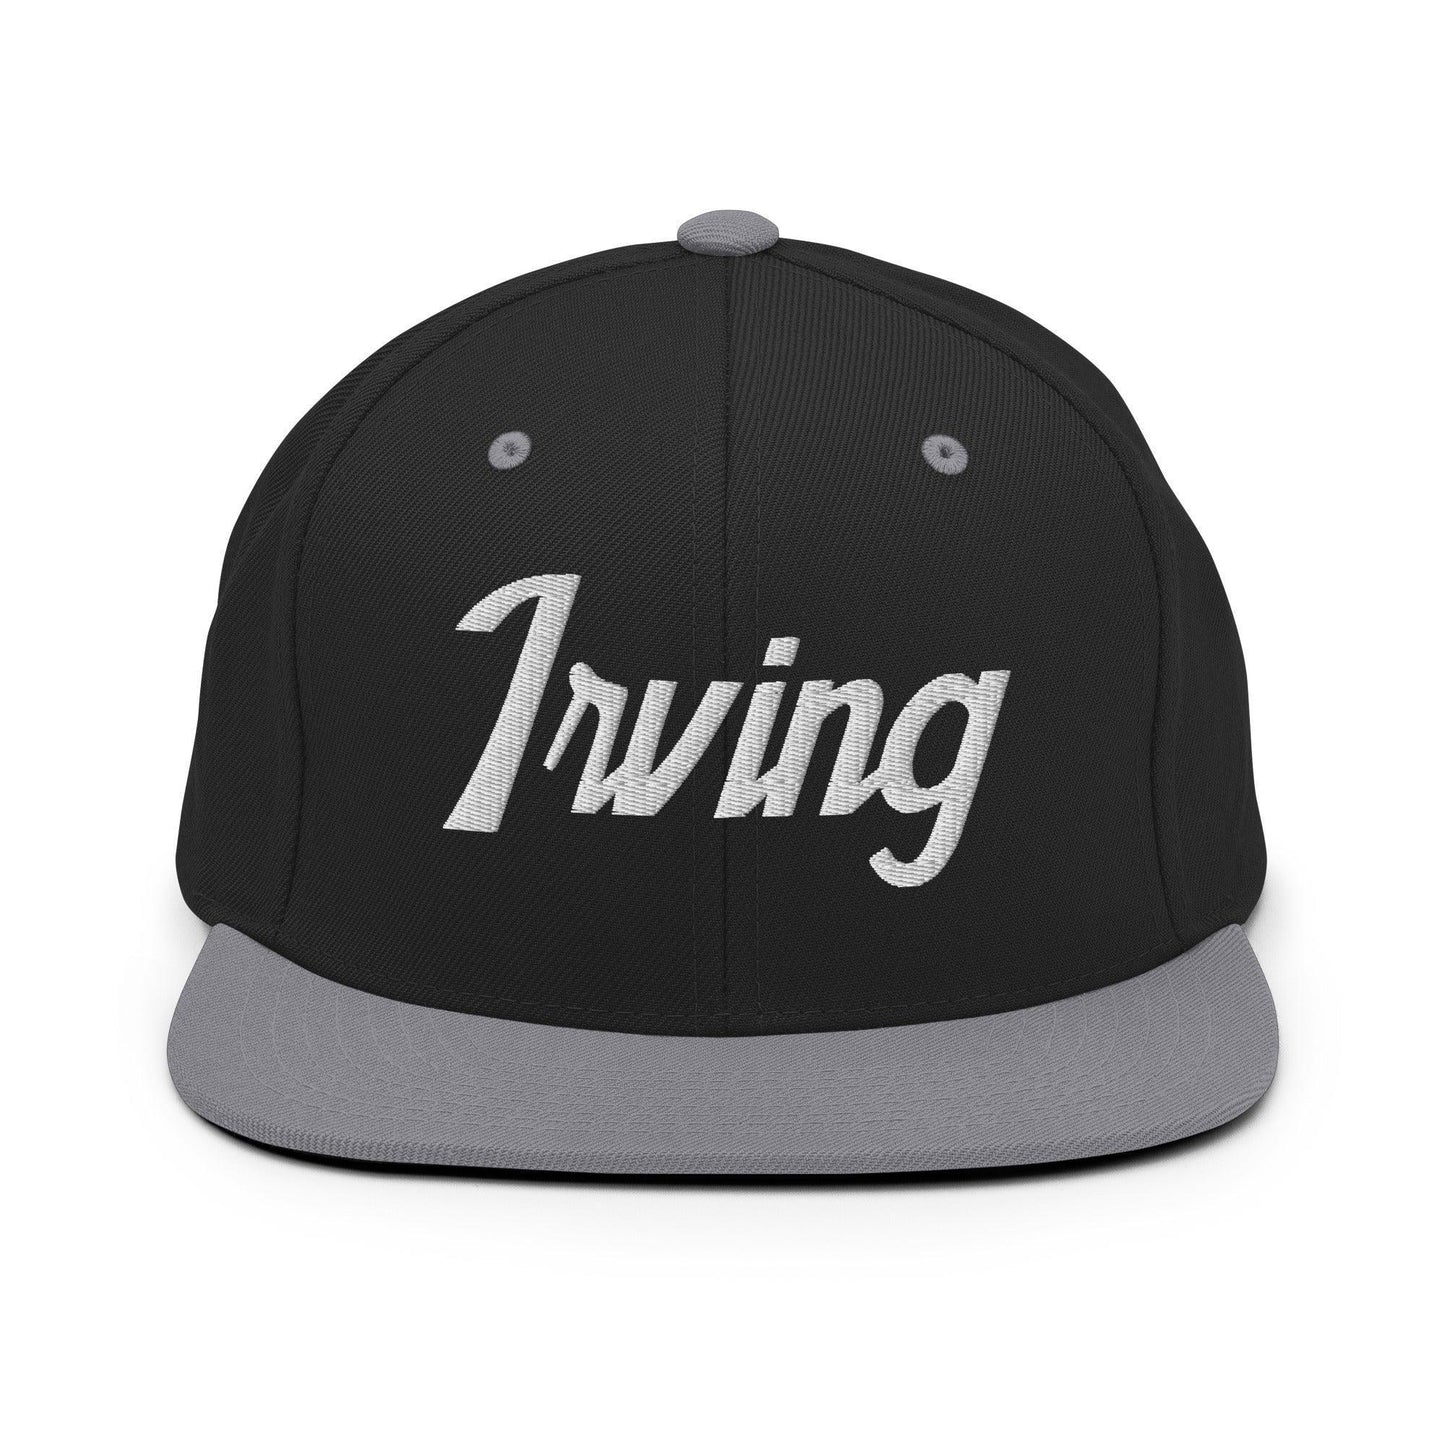 Irving Script Snapback Hat Black Silver